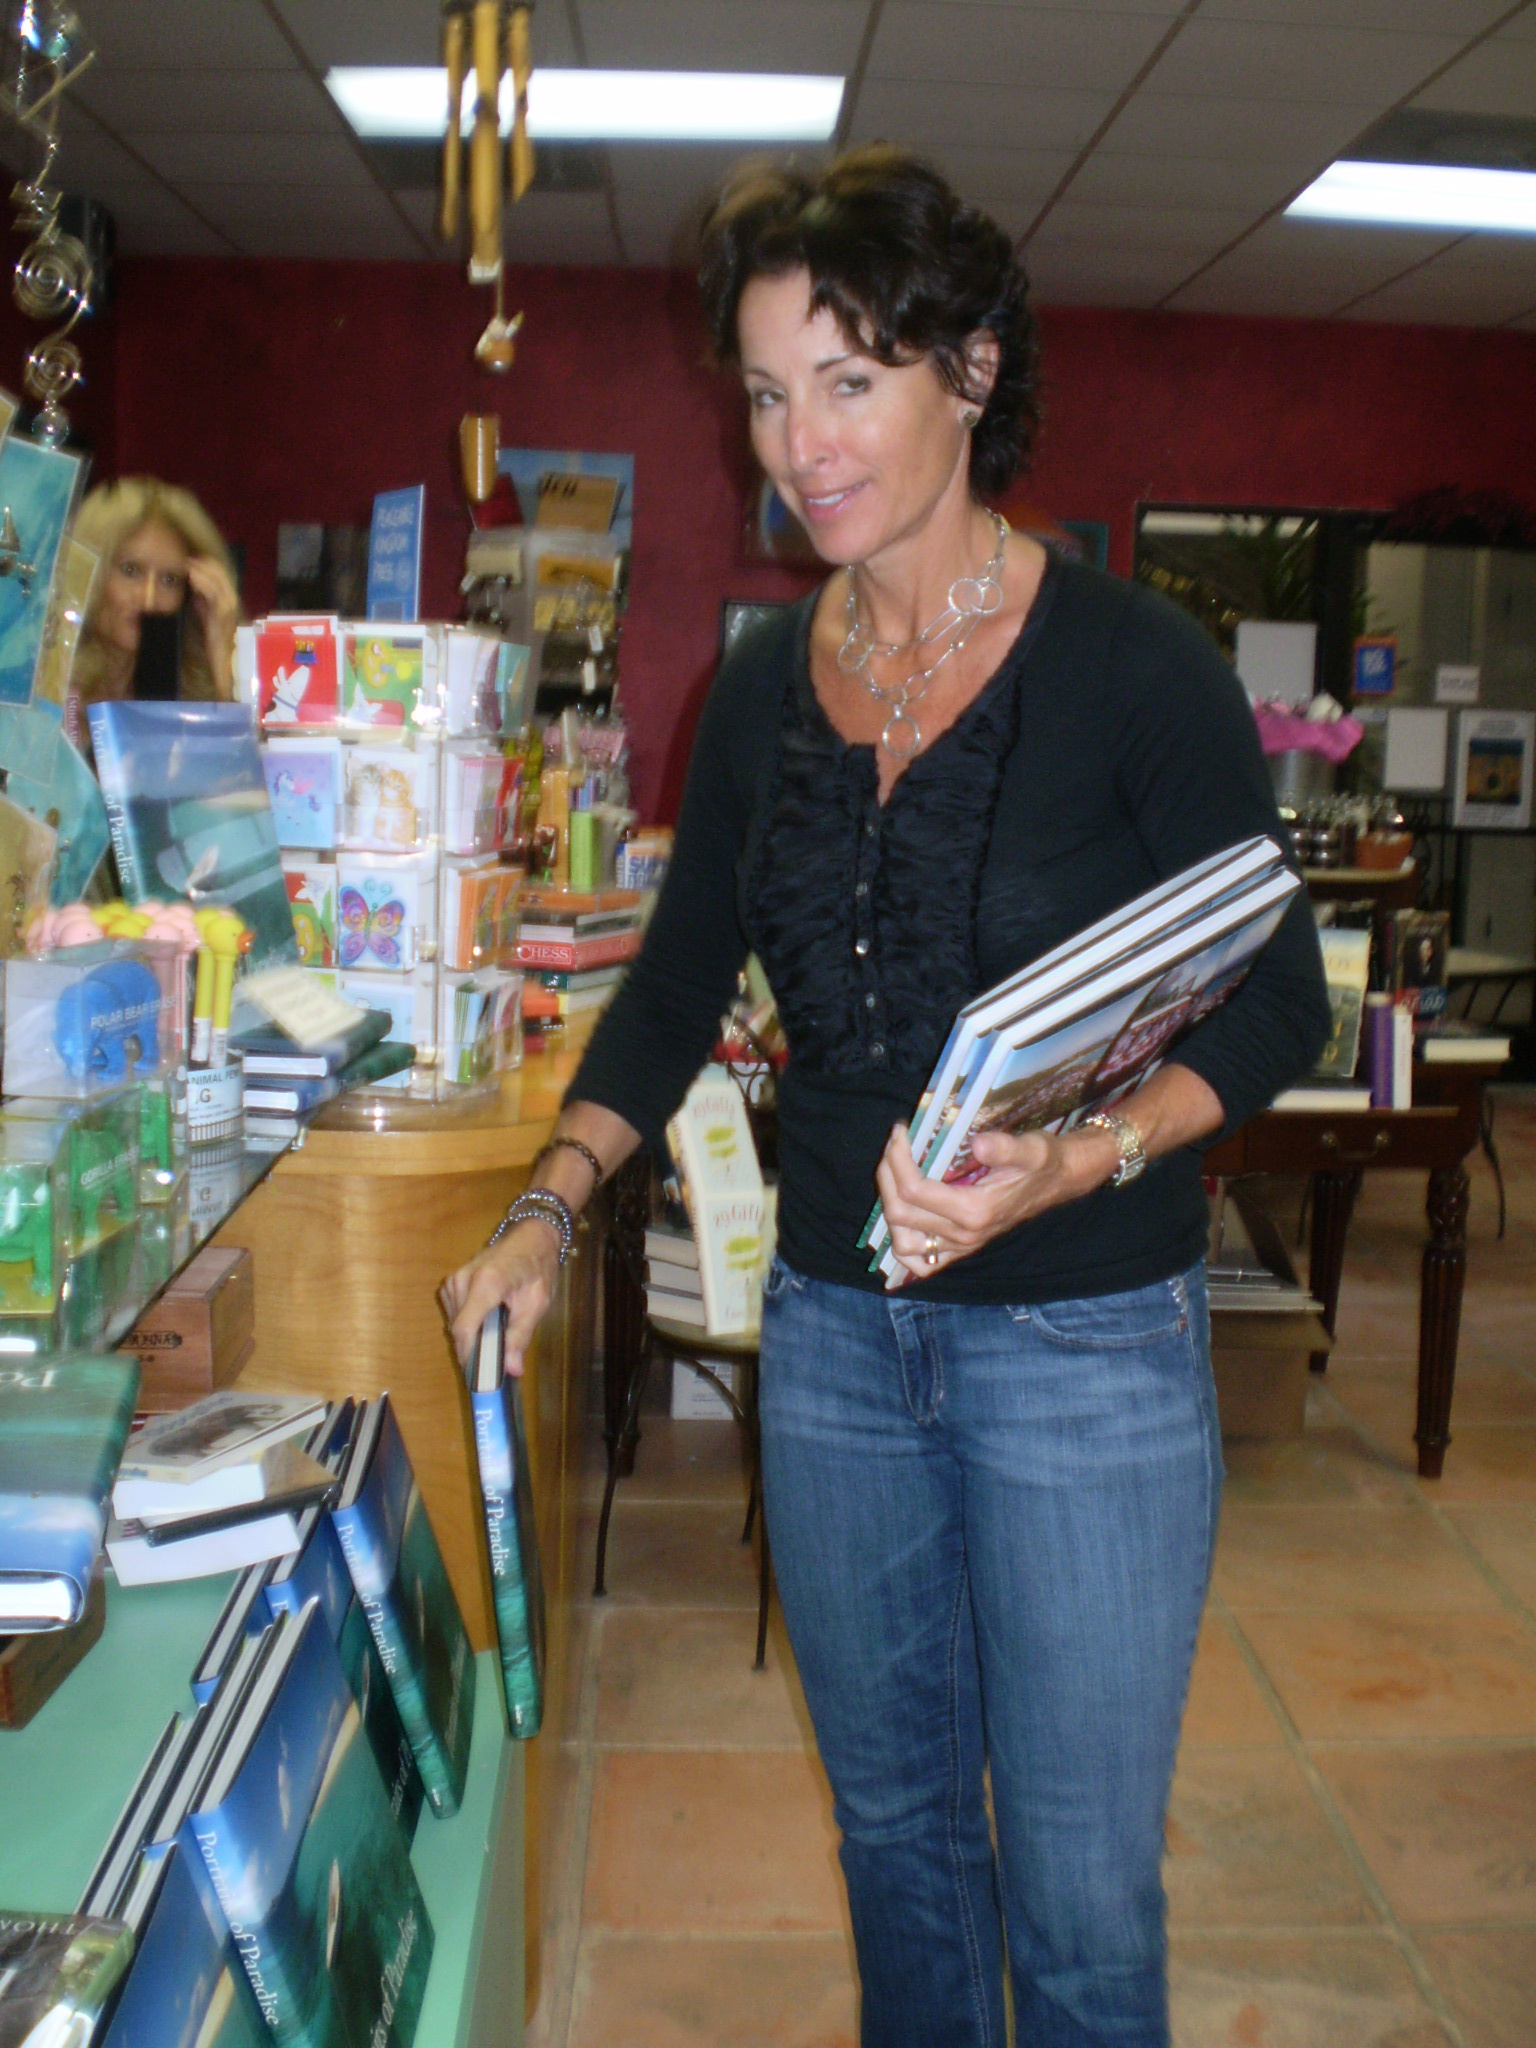 Undercover Books owner Kathy Bennett stocking "Portraits of Paradise."